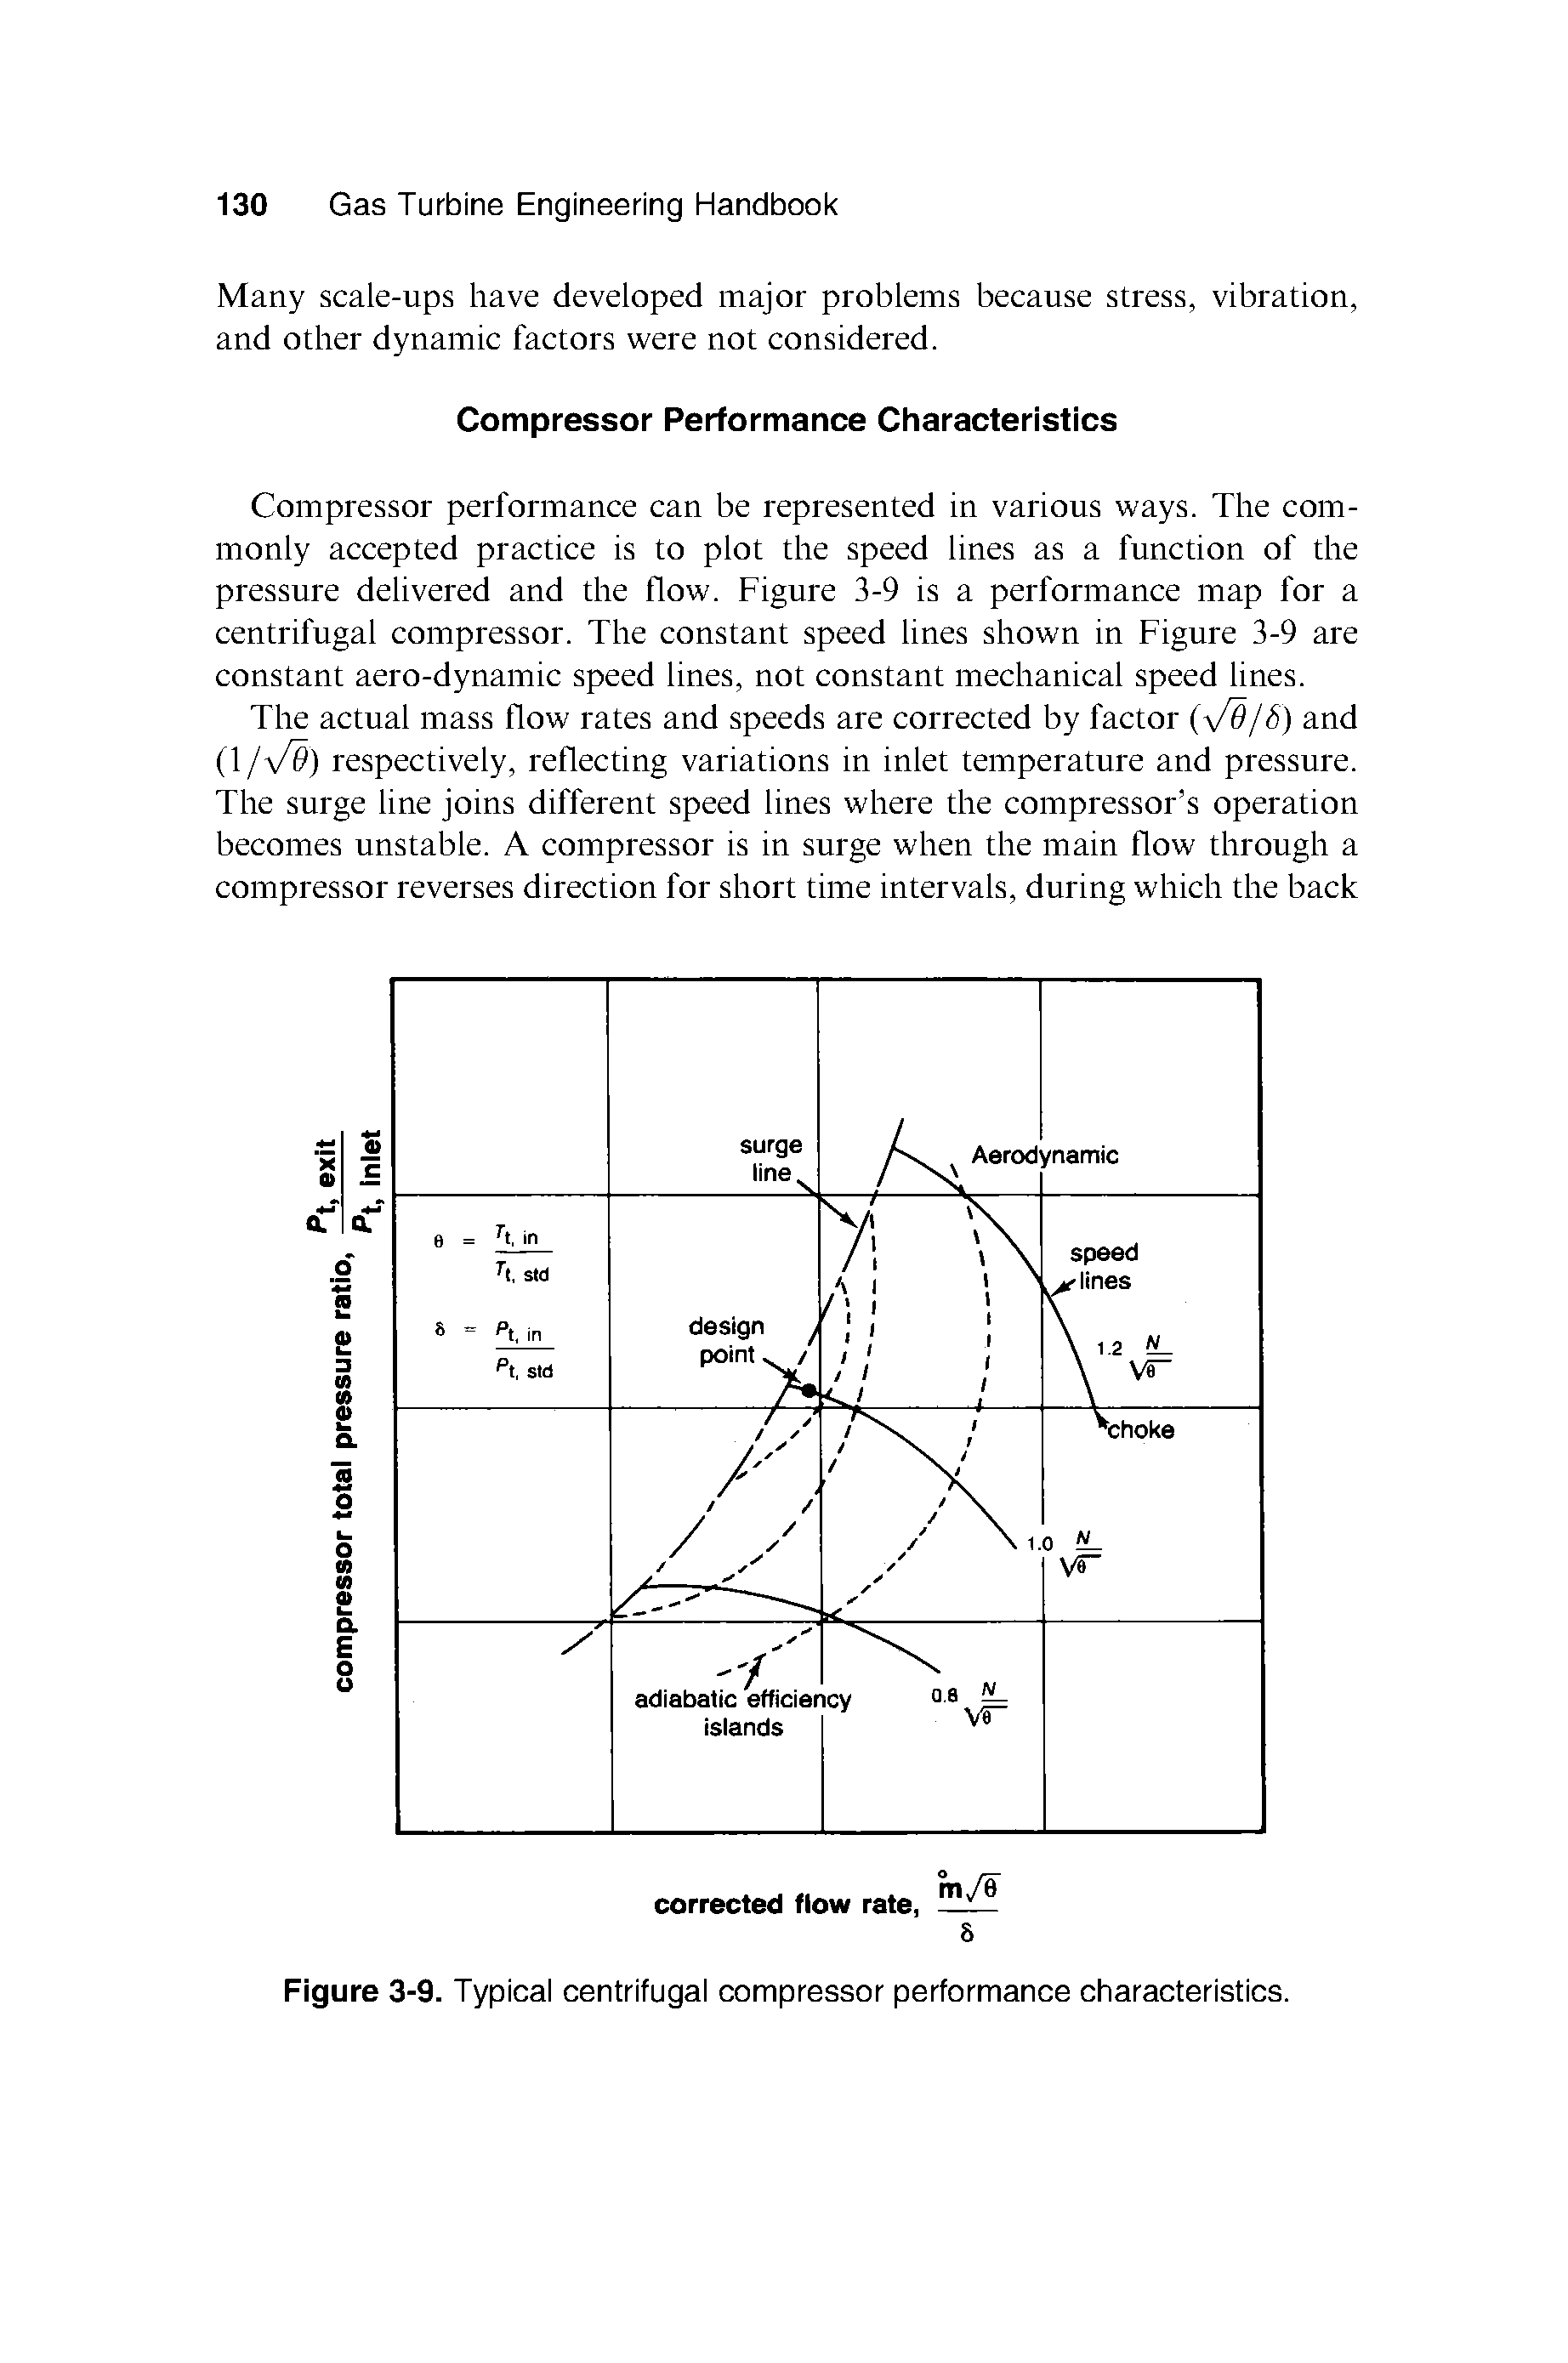 Figure 3-9. Typical centrifugal compressor performance characteristics.